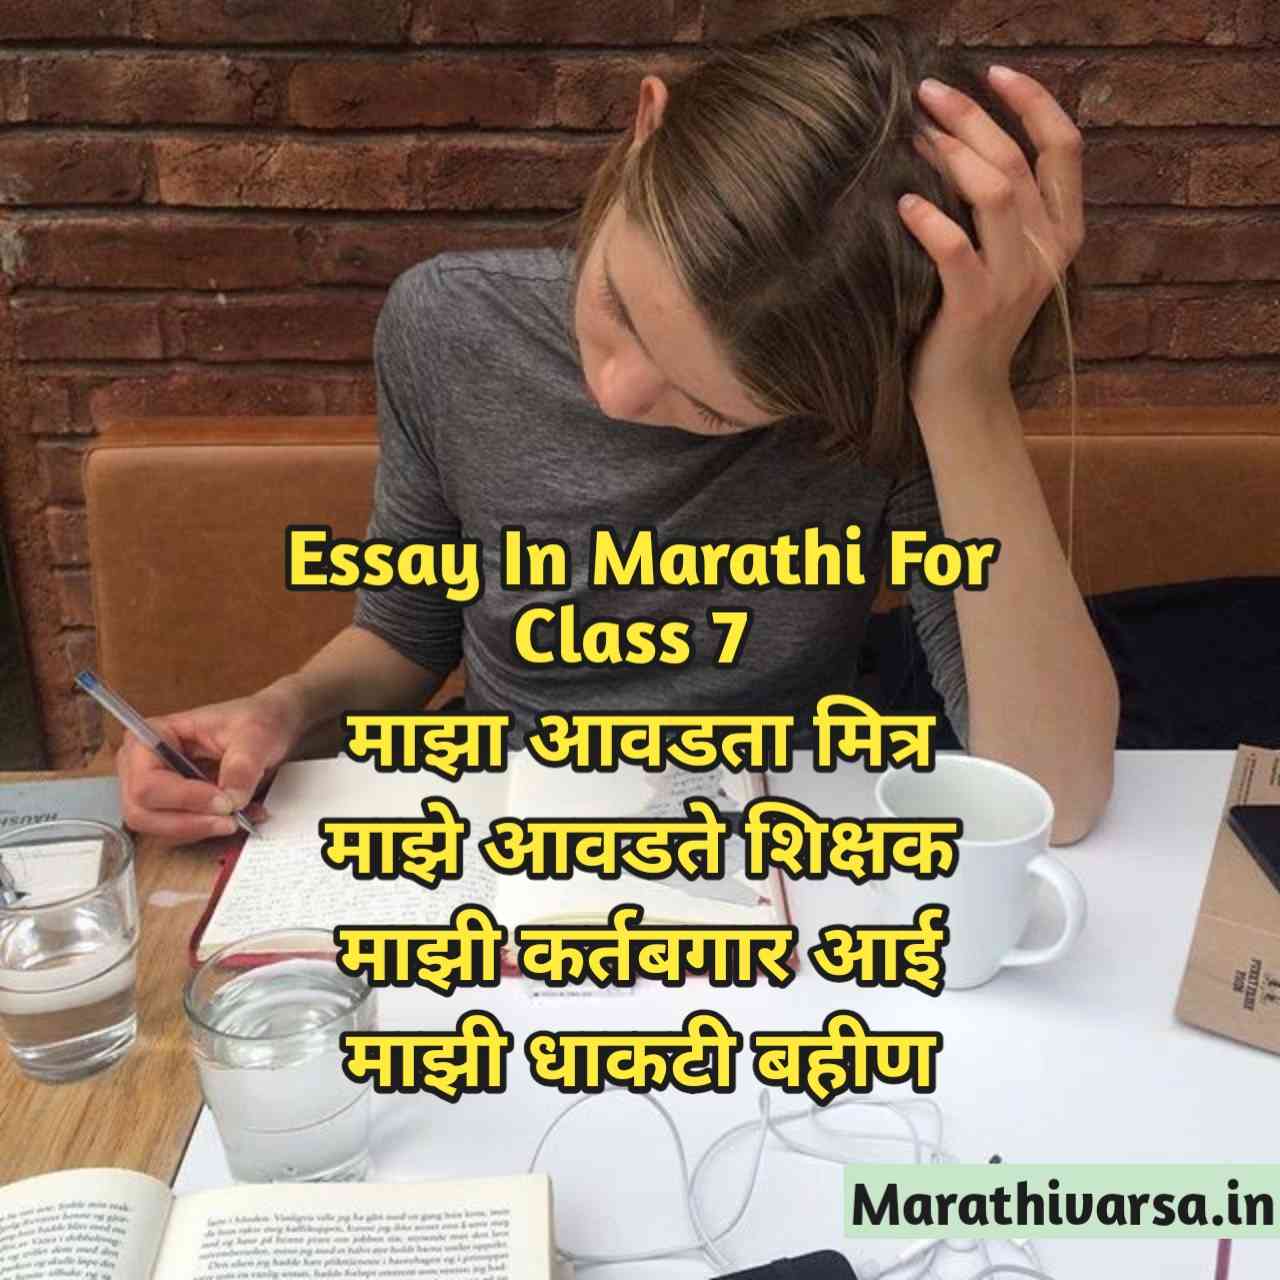 Essay In Marathi For Class 7